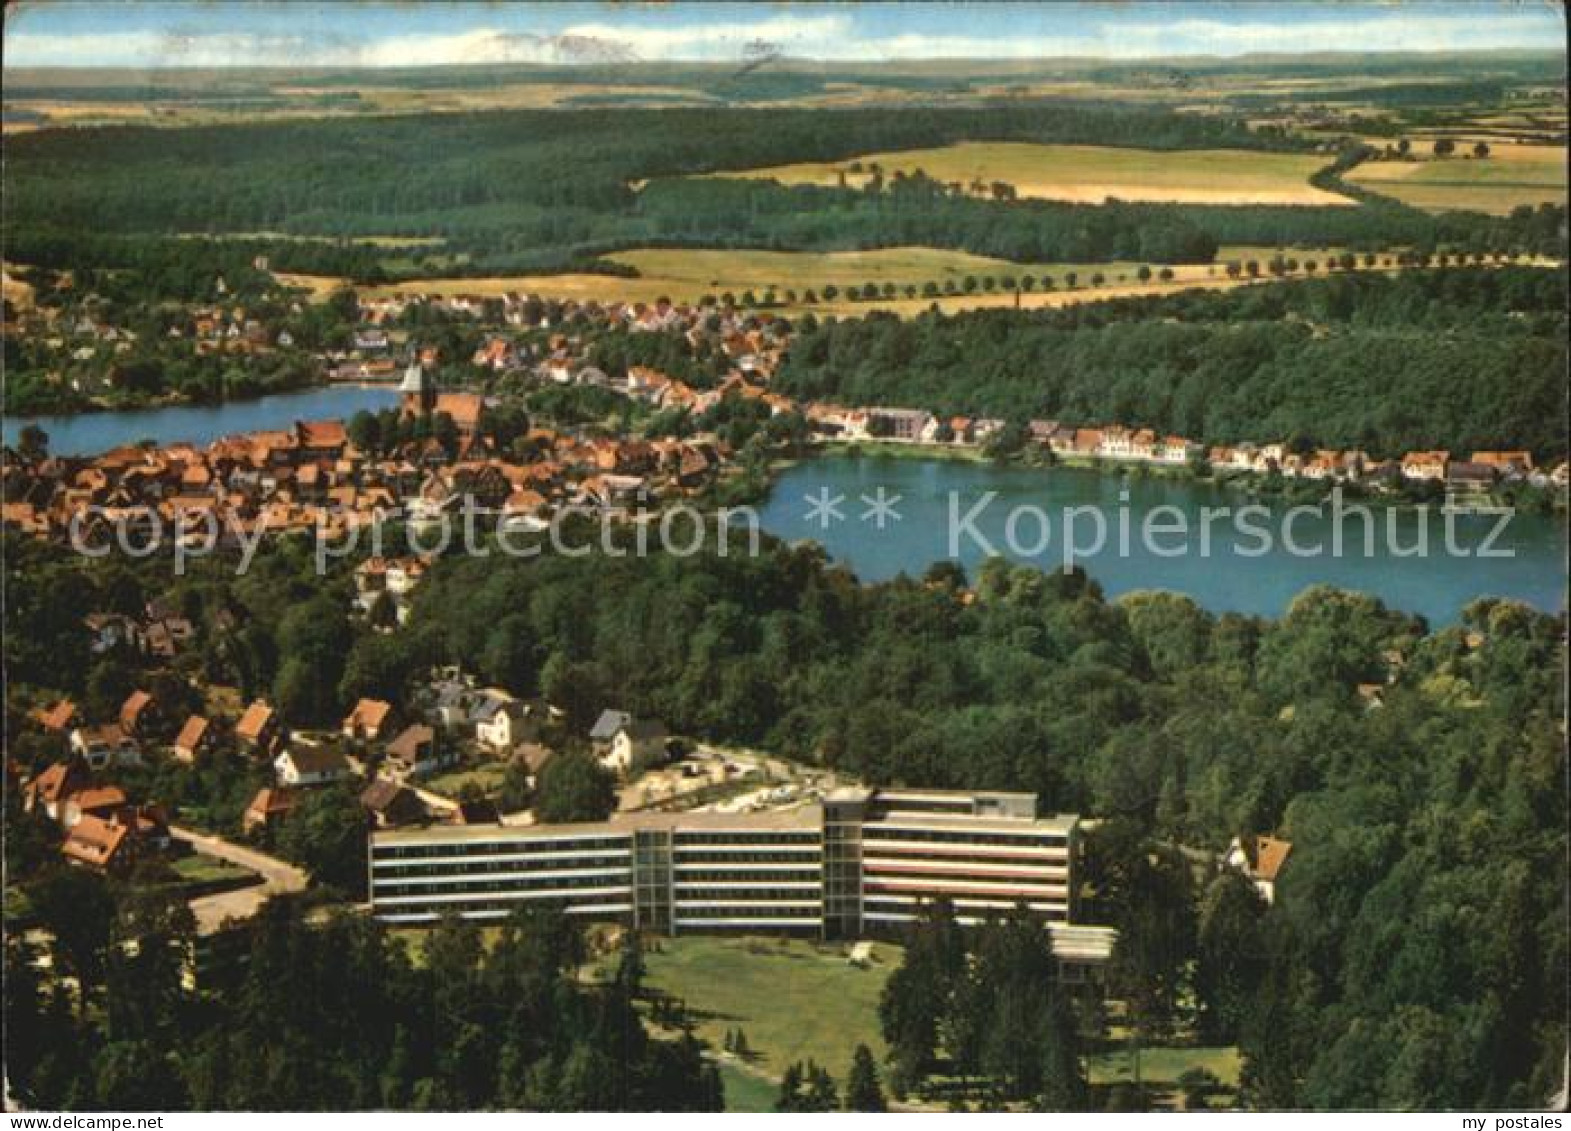 72526415 Moelln Lauenburg Sanatorium Foehrenkamp Moelln - Moelln